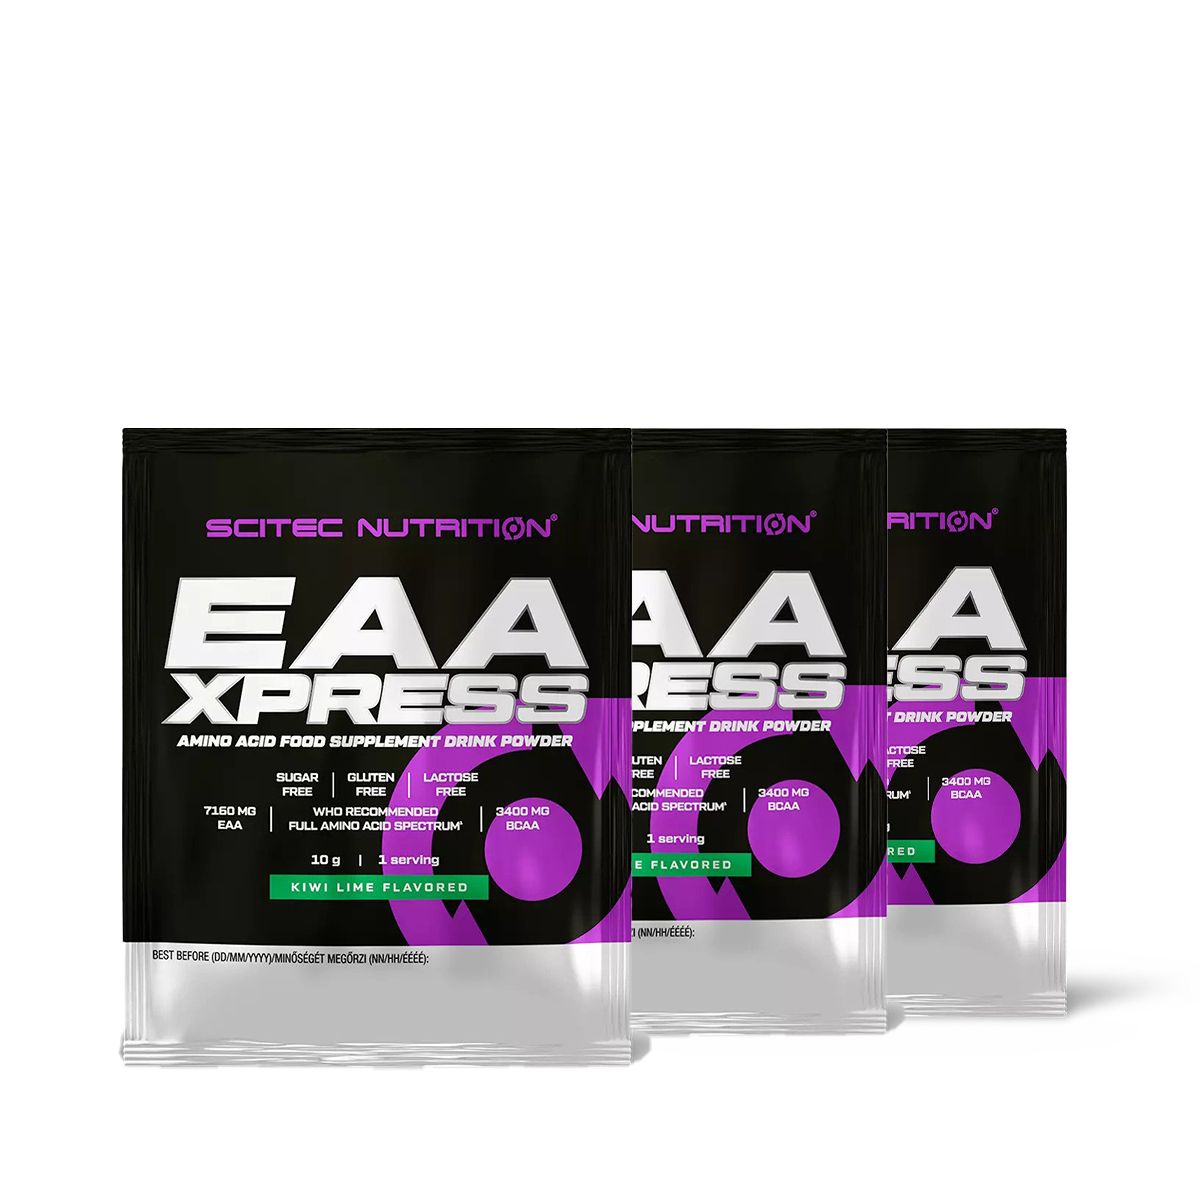 SCITEC NUTRITION - EAA XPRESS - 3 x 10 G